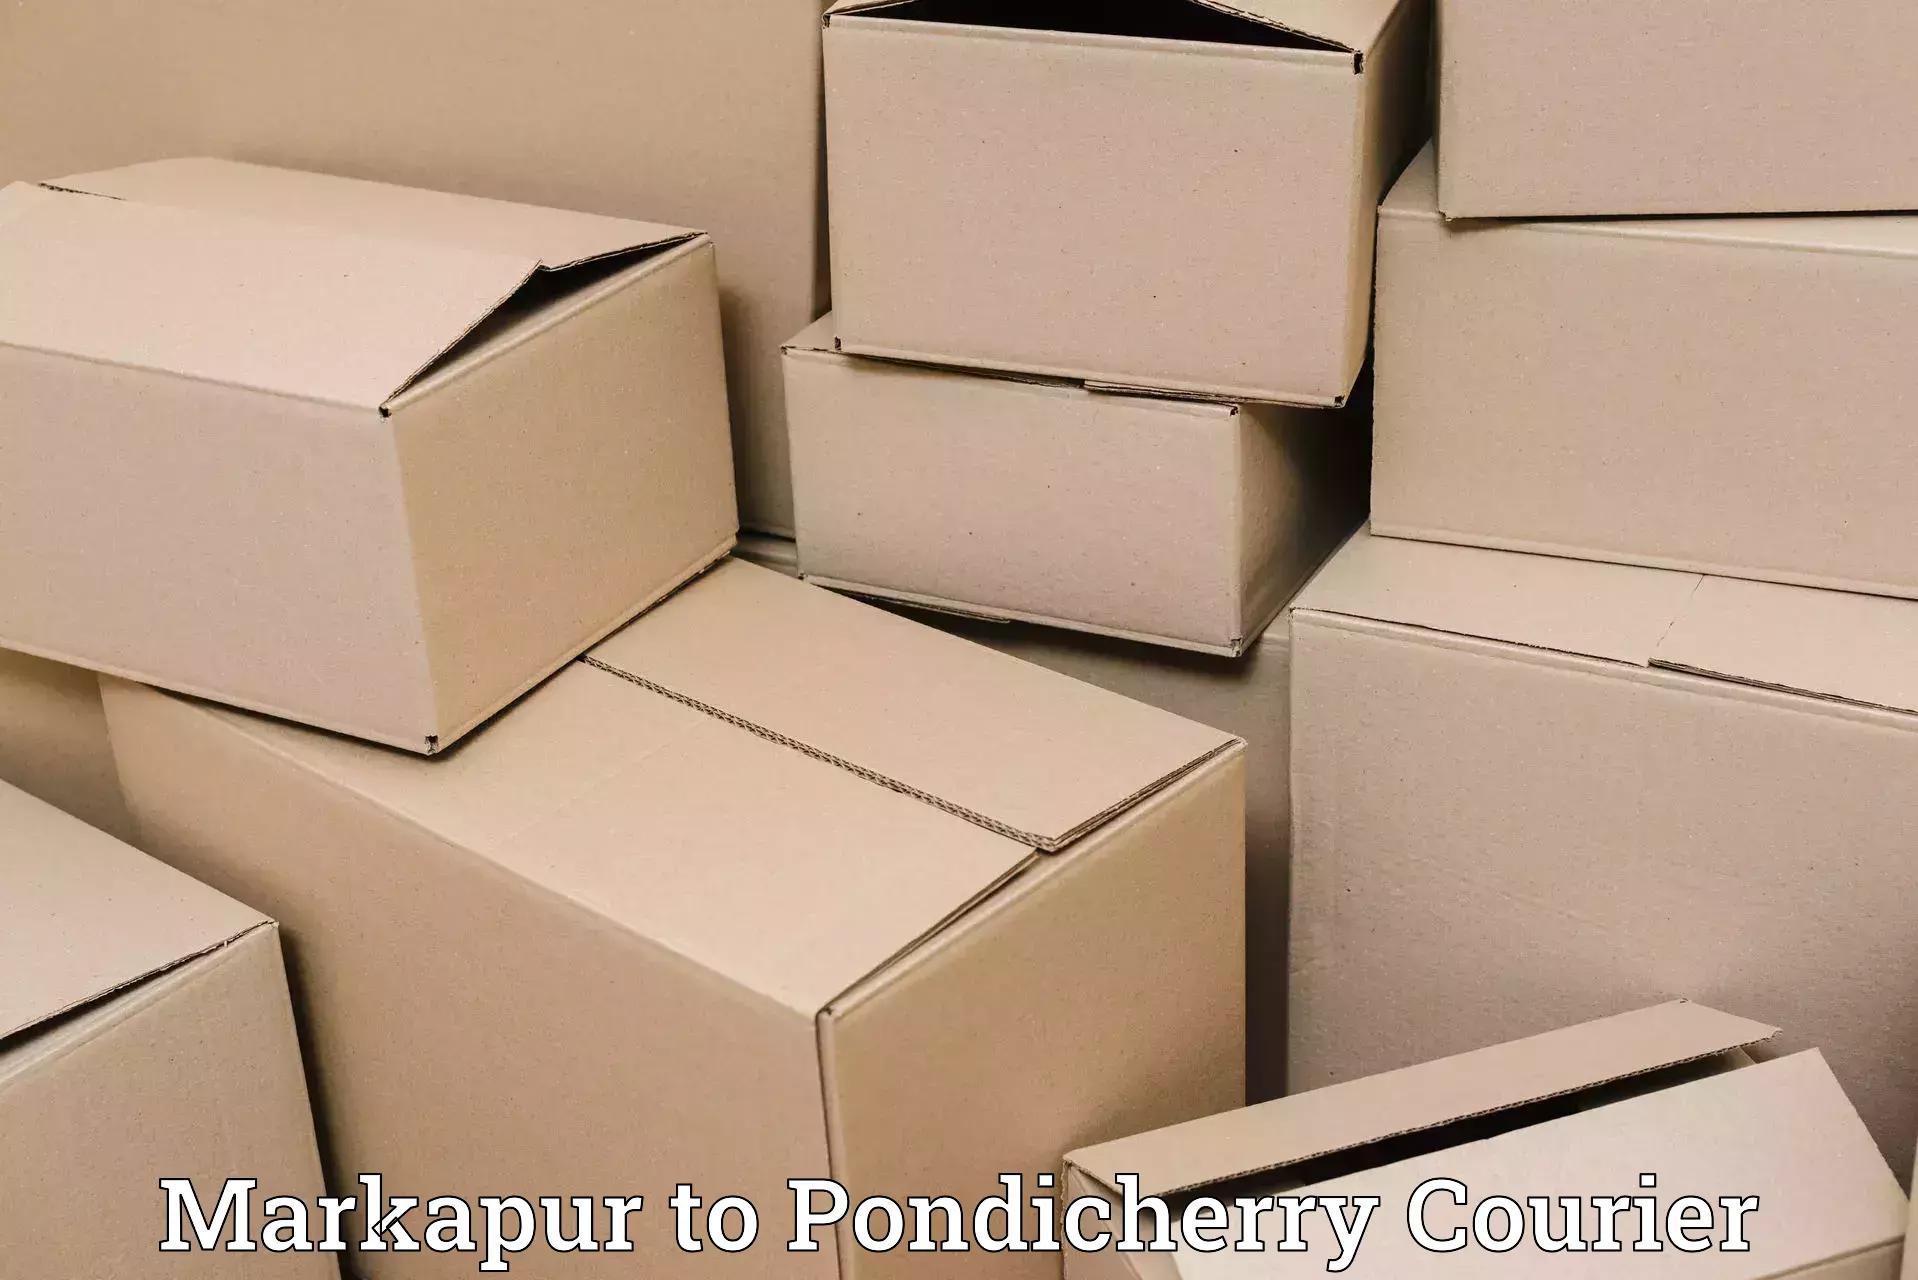 Courier service partnerships Markapur to Pondicherry University